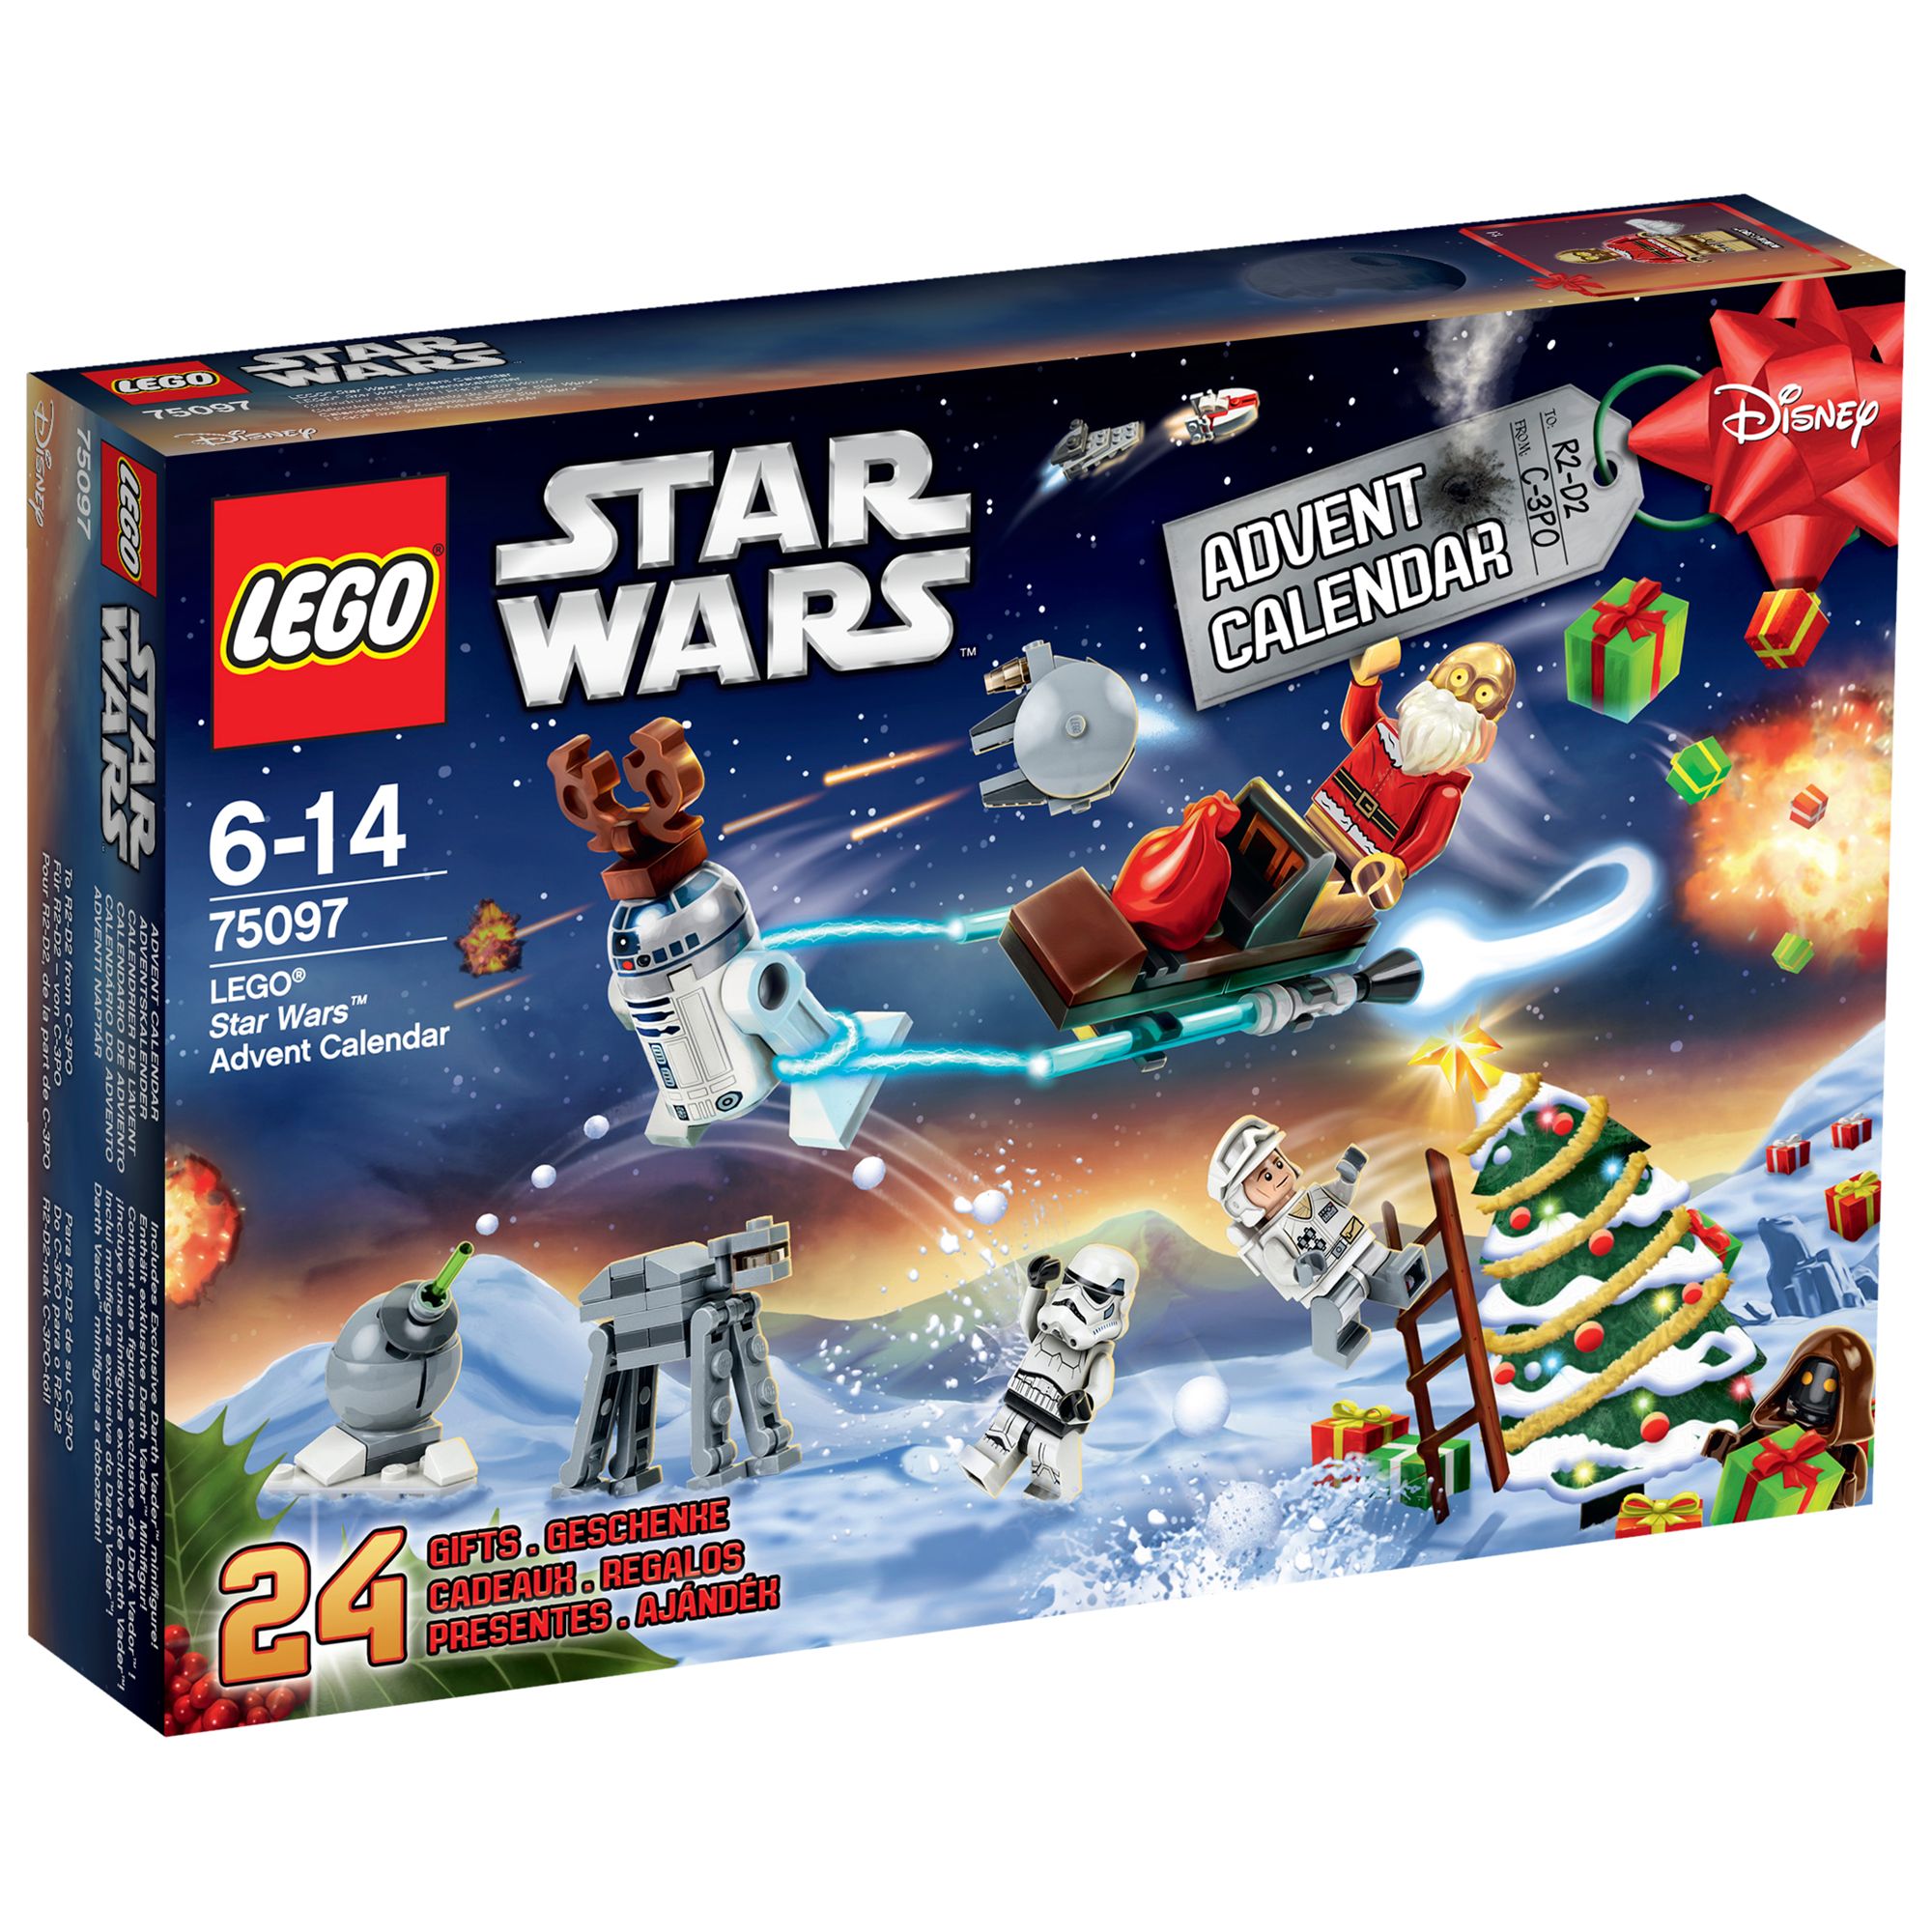 Advent Calendar Star Wars Lego - Customize and Print